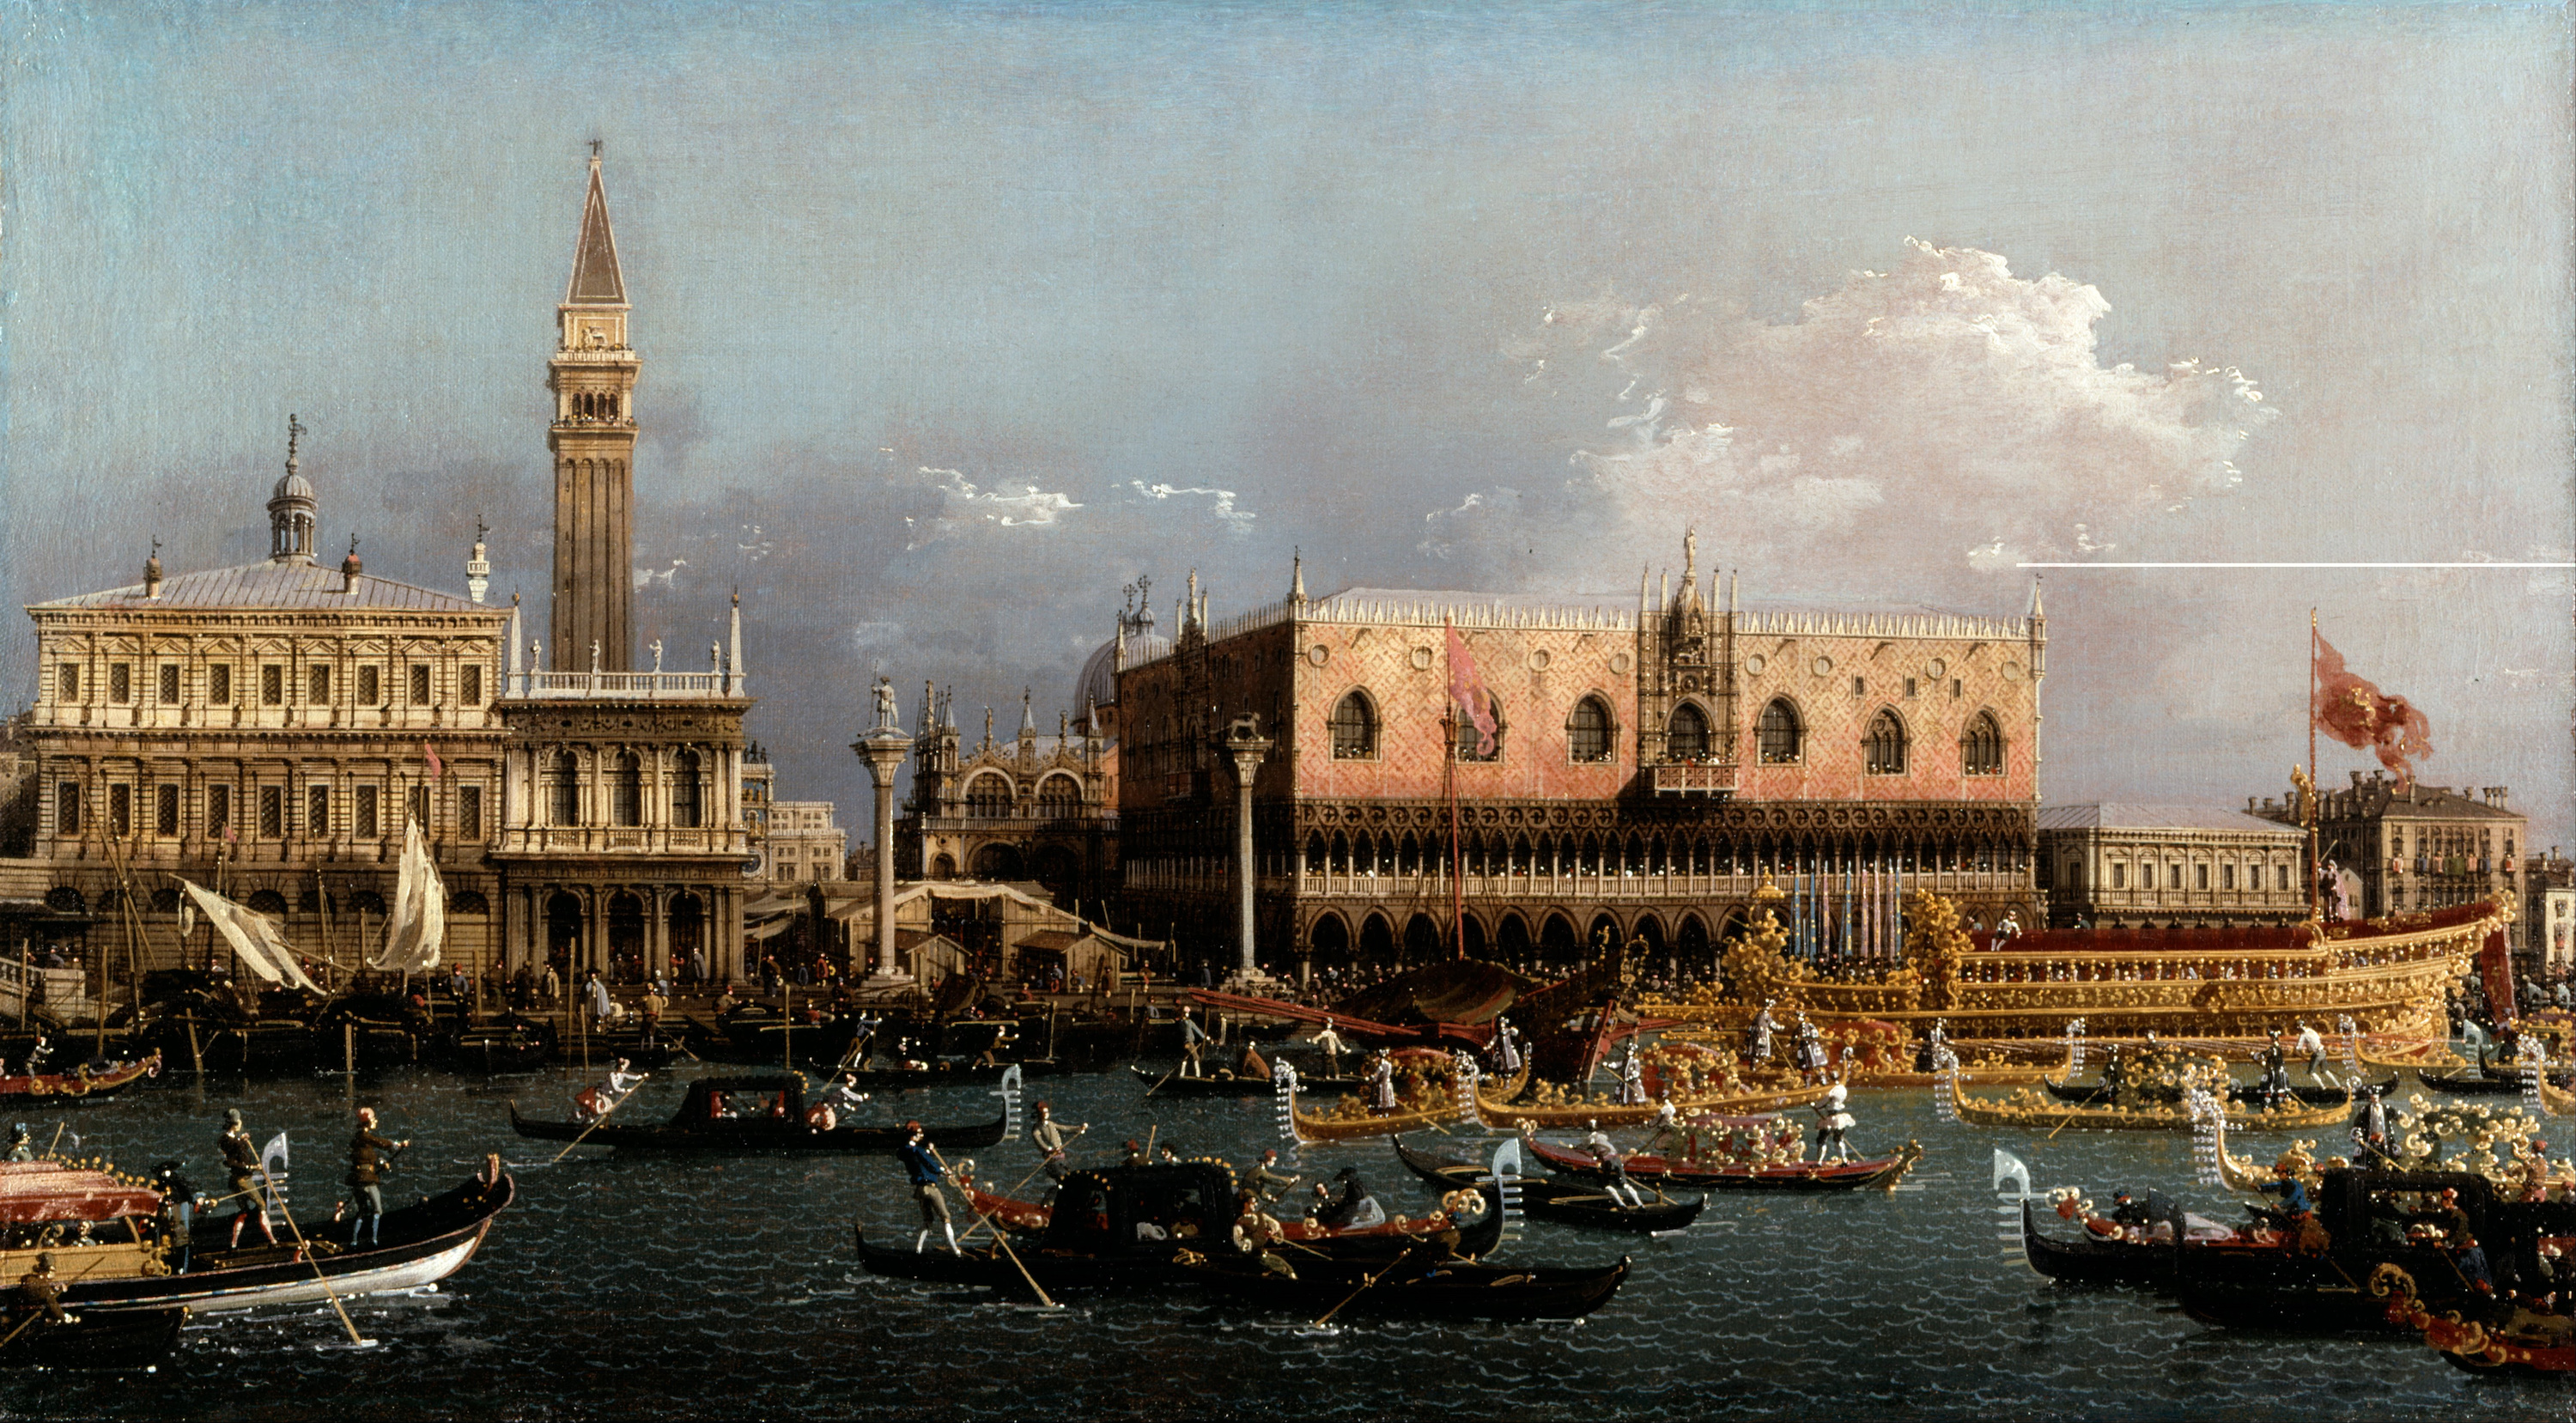 耶穌升天節於莫洛的國營駁船 by Giovanni Antonio Canal (Canaletto) - 1760 - 101.8 x 58.3 cm 